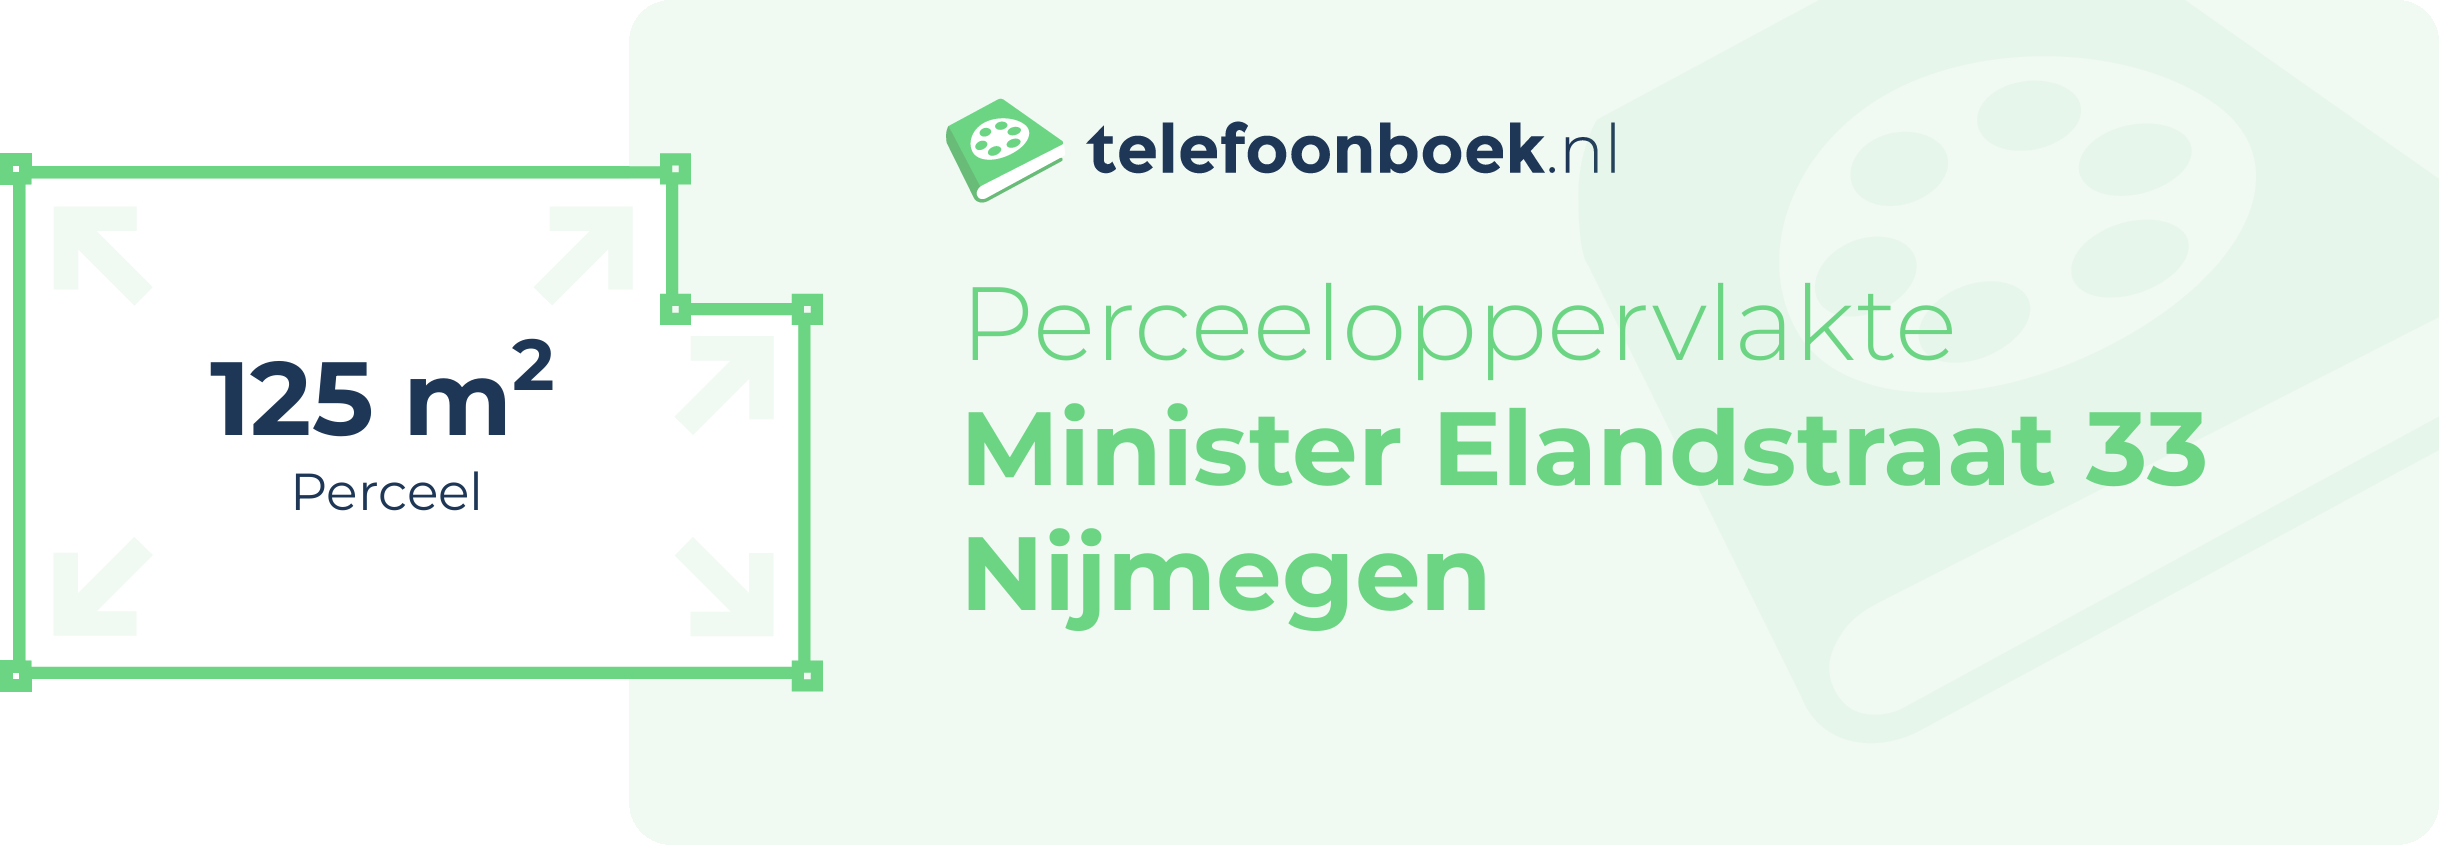 Perceeloppervlakte Minister Elandstraat 33 Nijmegen